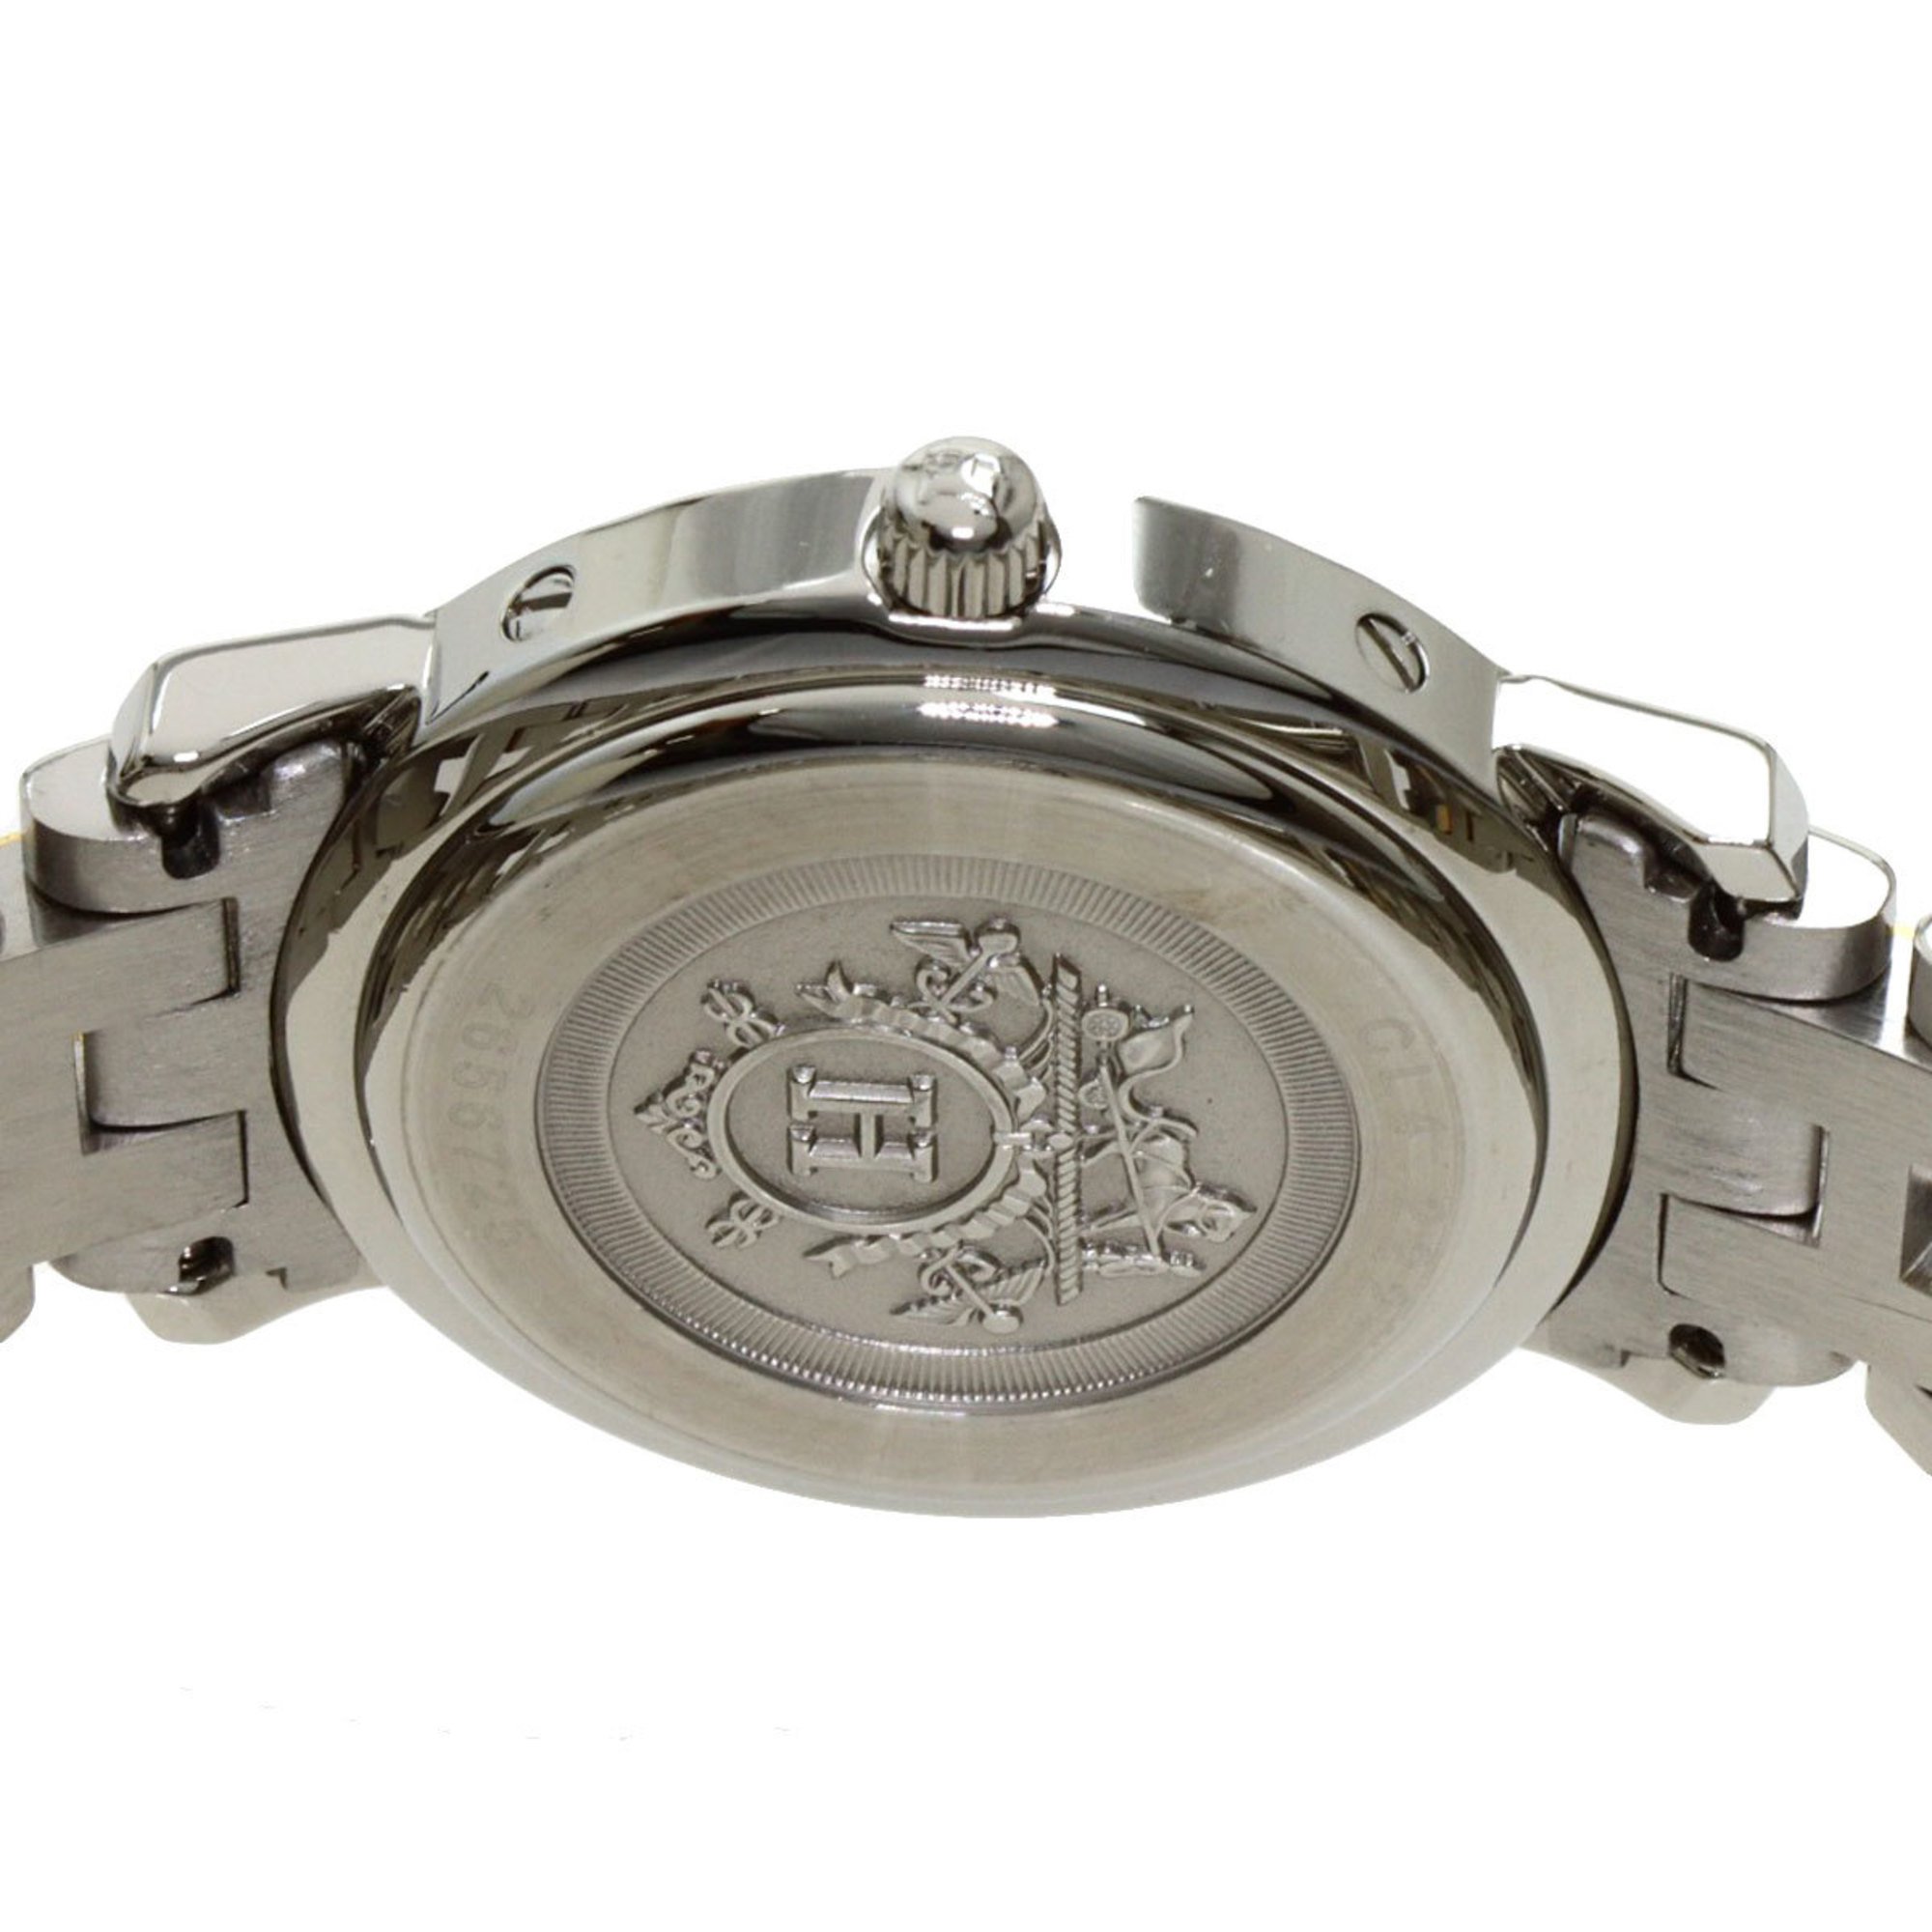 Hermes CL4.222 Clipper Nacle 12P Diamond Bezel Watch Stainless Steel SSxPGP Women's HERMES